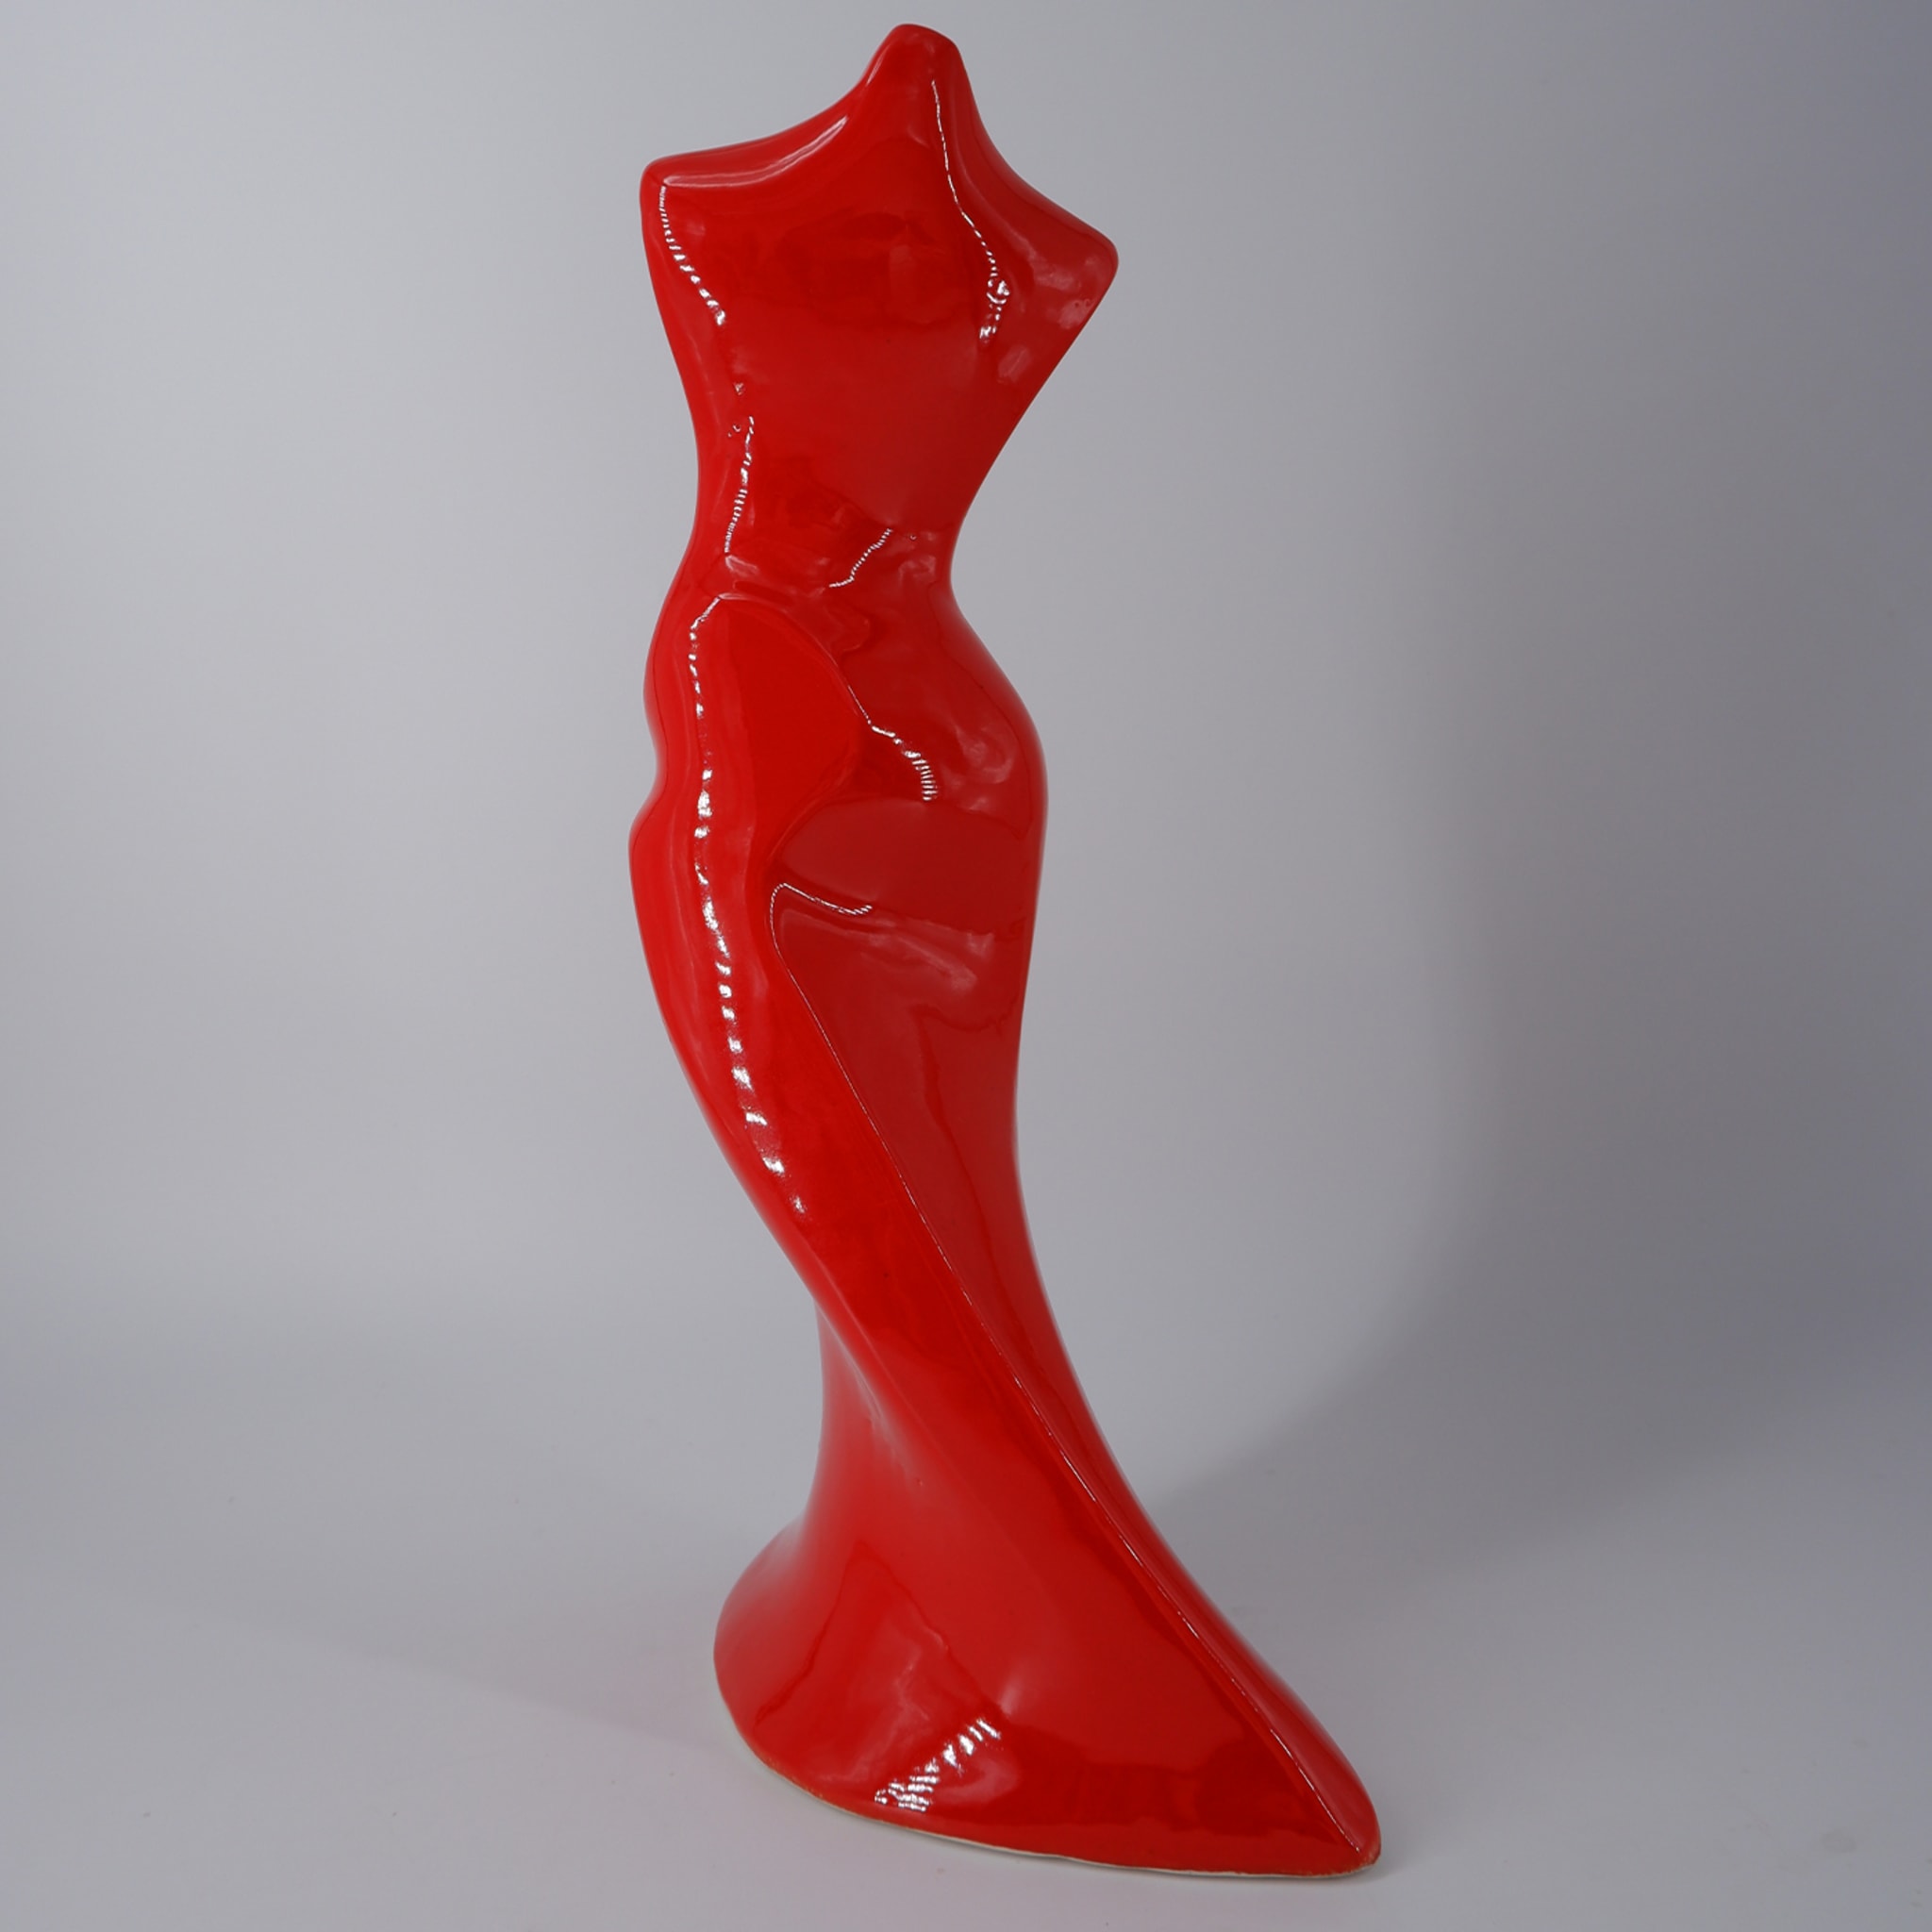 Greta Red Sculpture - Alternative view 2